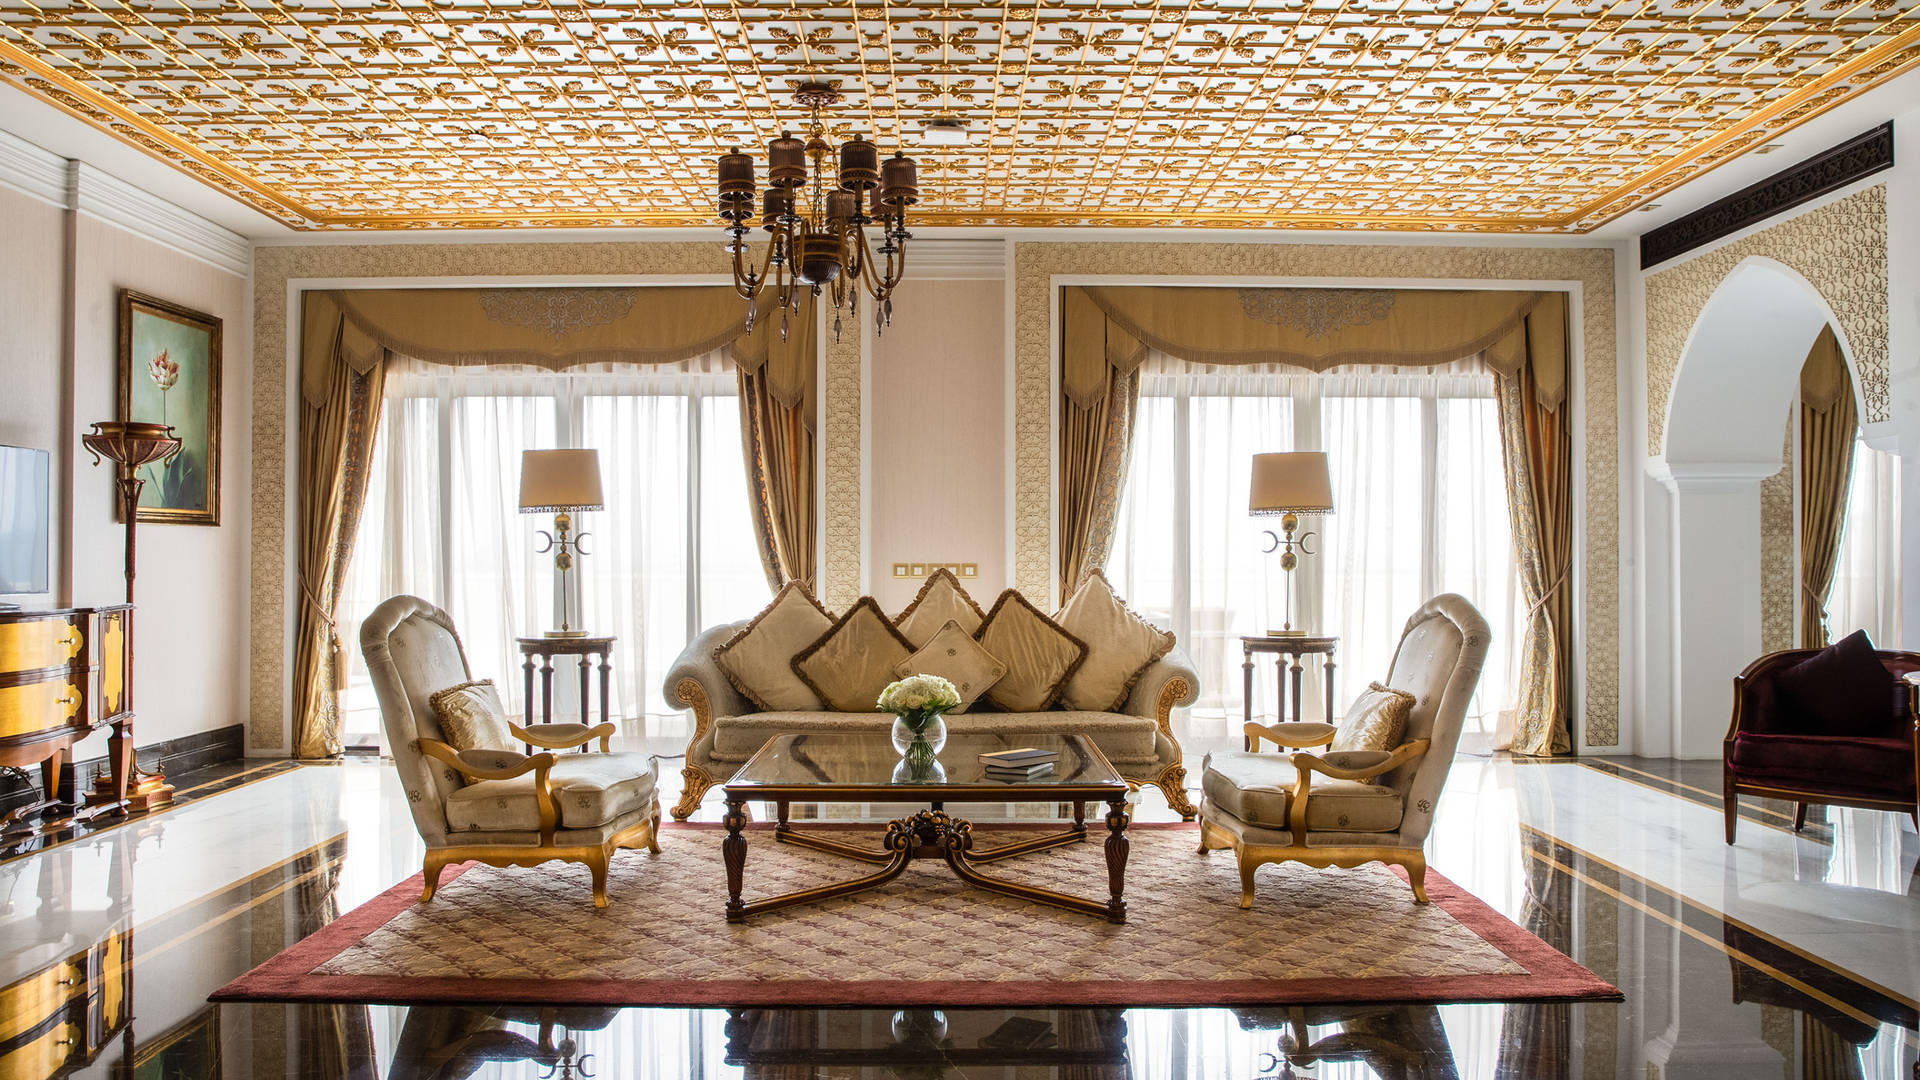 Grand Imperial Suite at Jumeirah Zabeel Saray